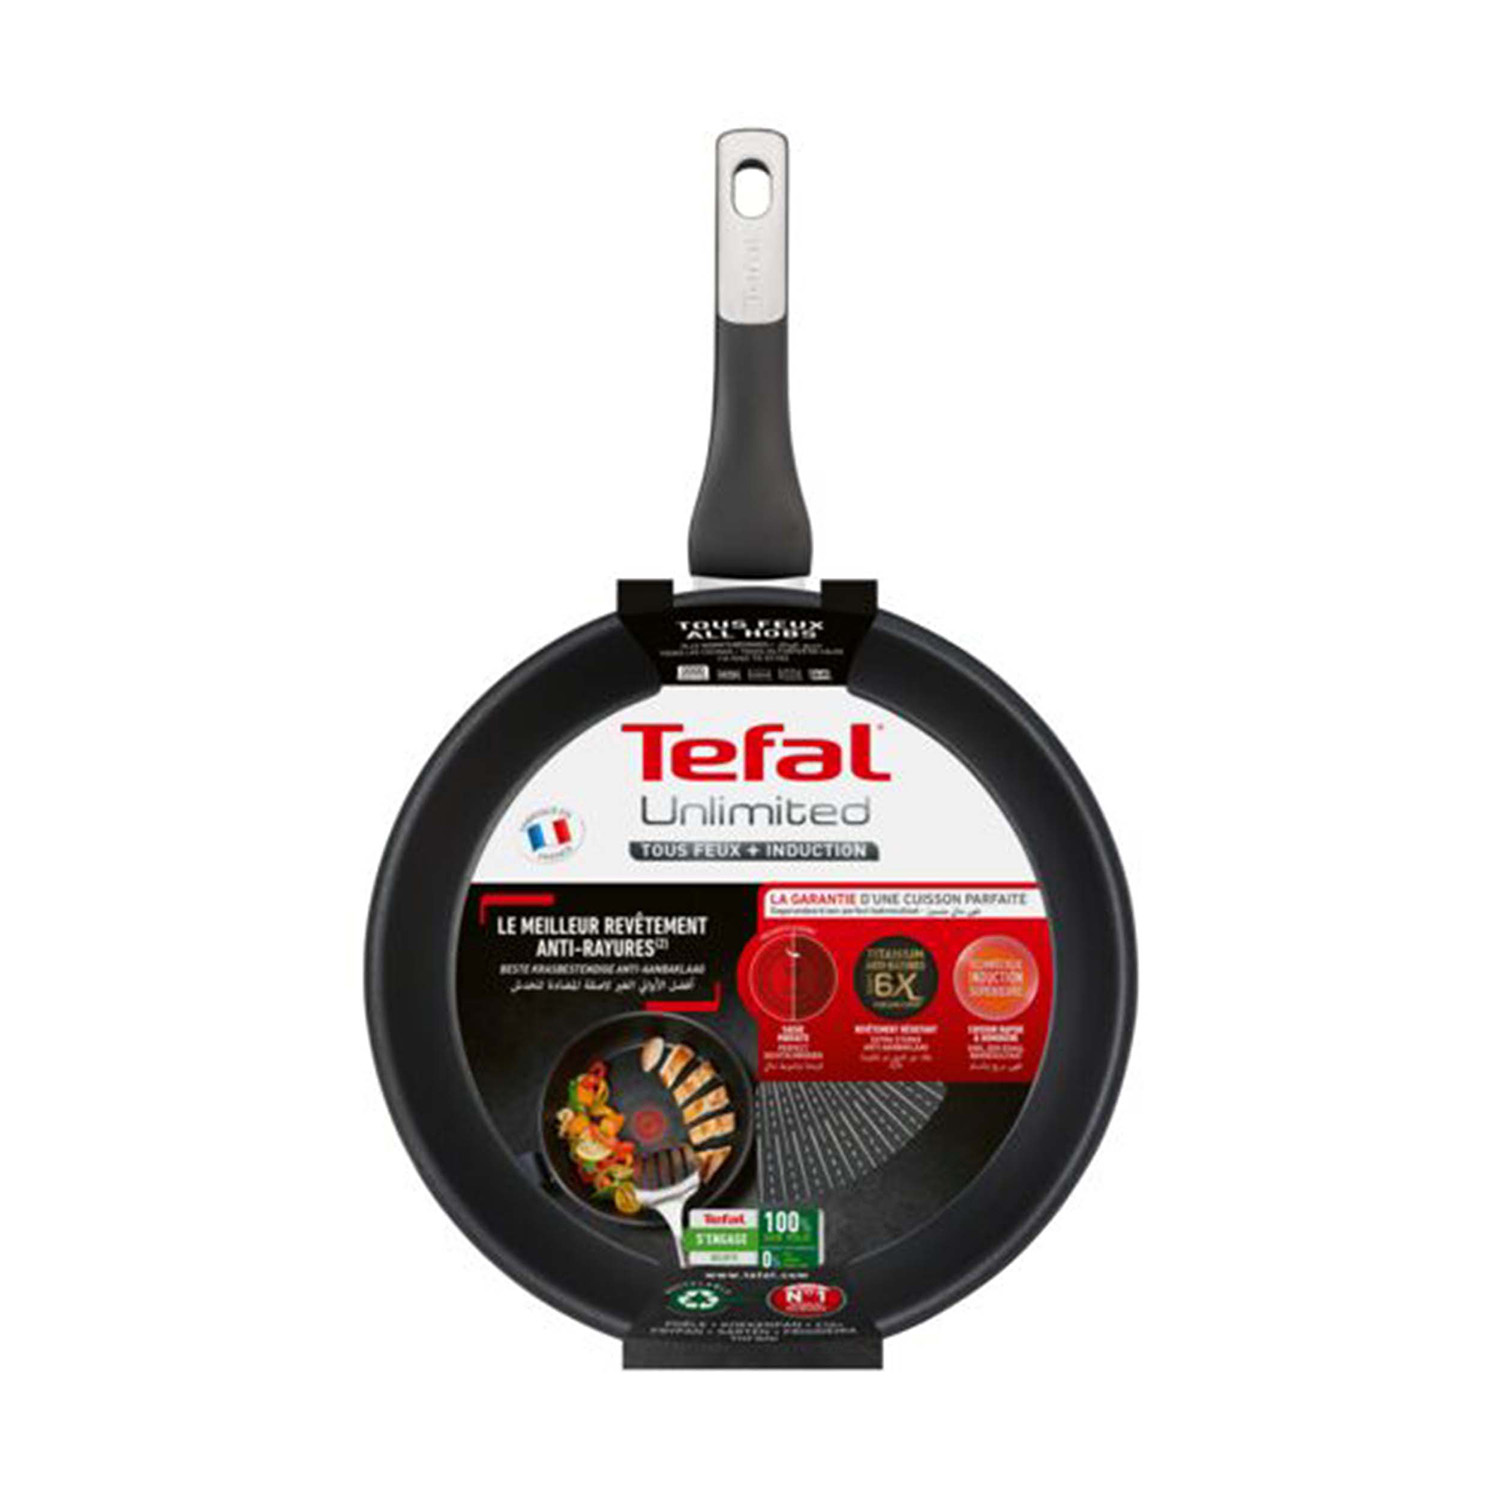 Tefal Unlimited 24cm Frying Pan